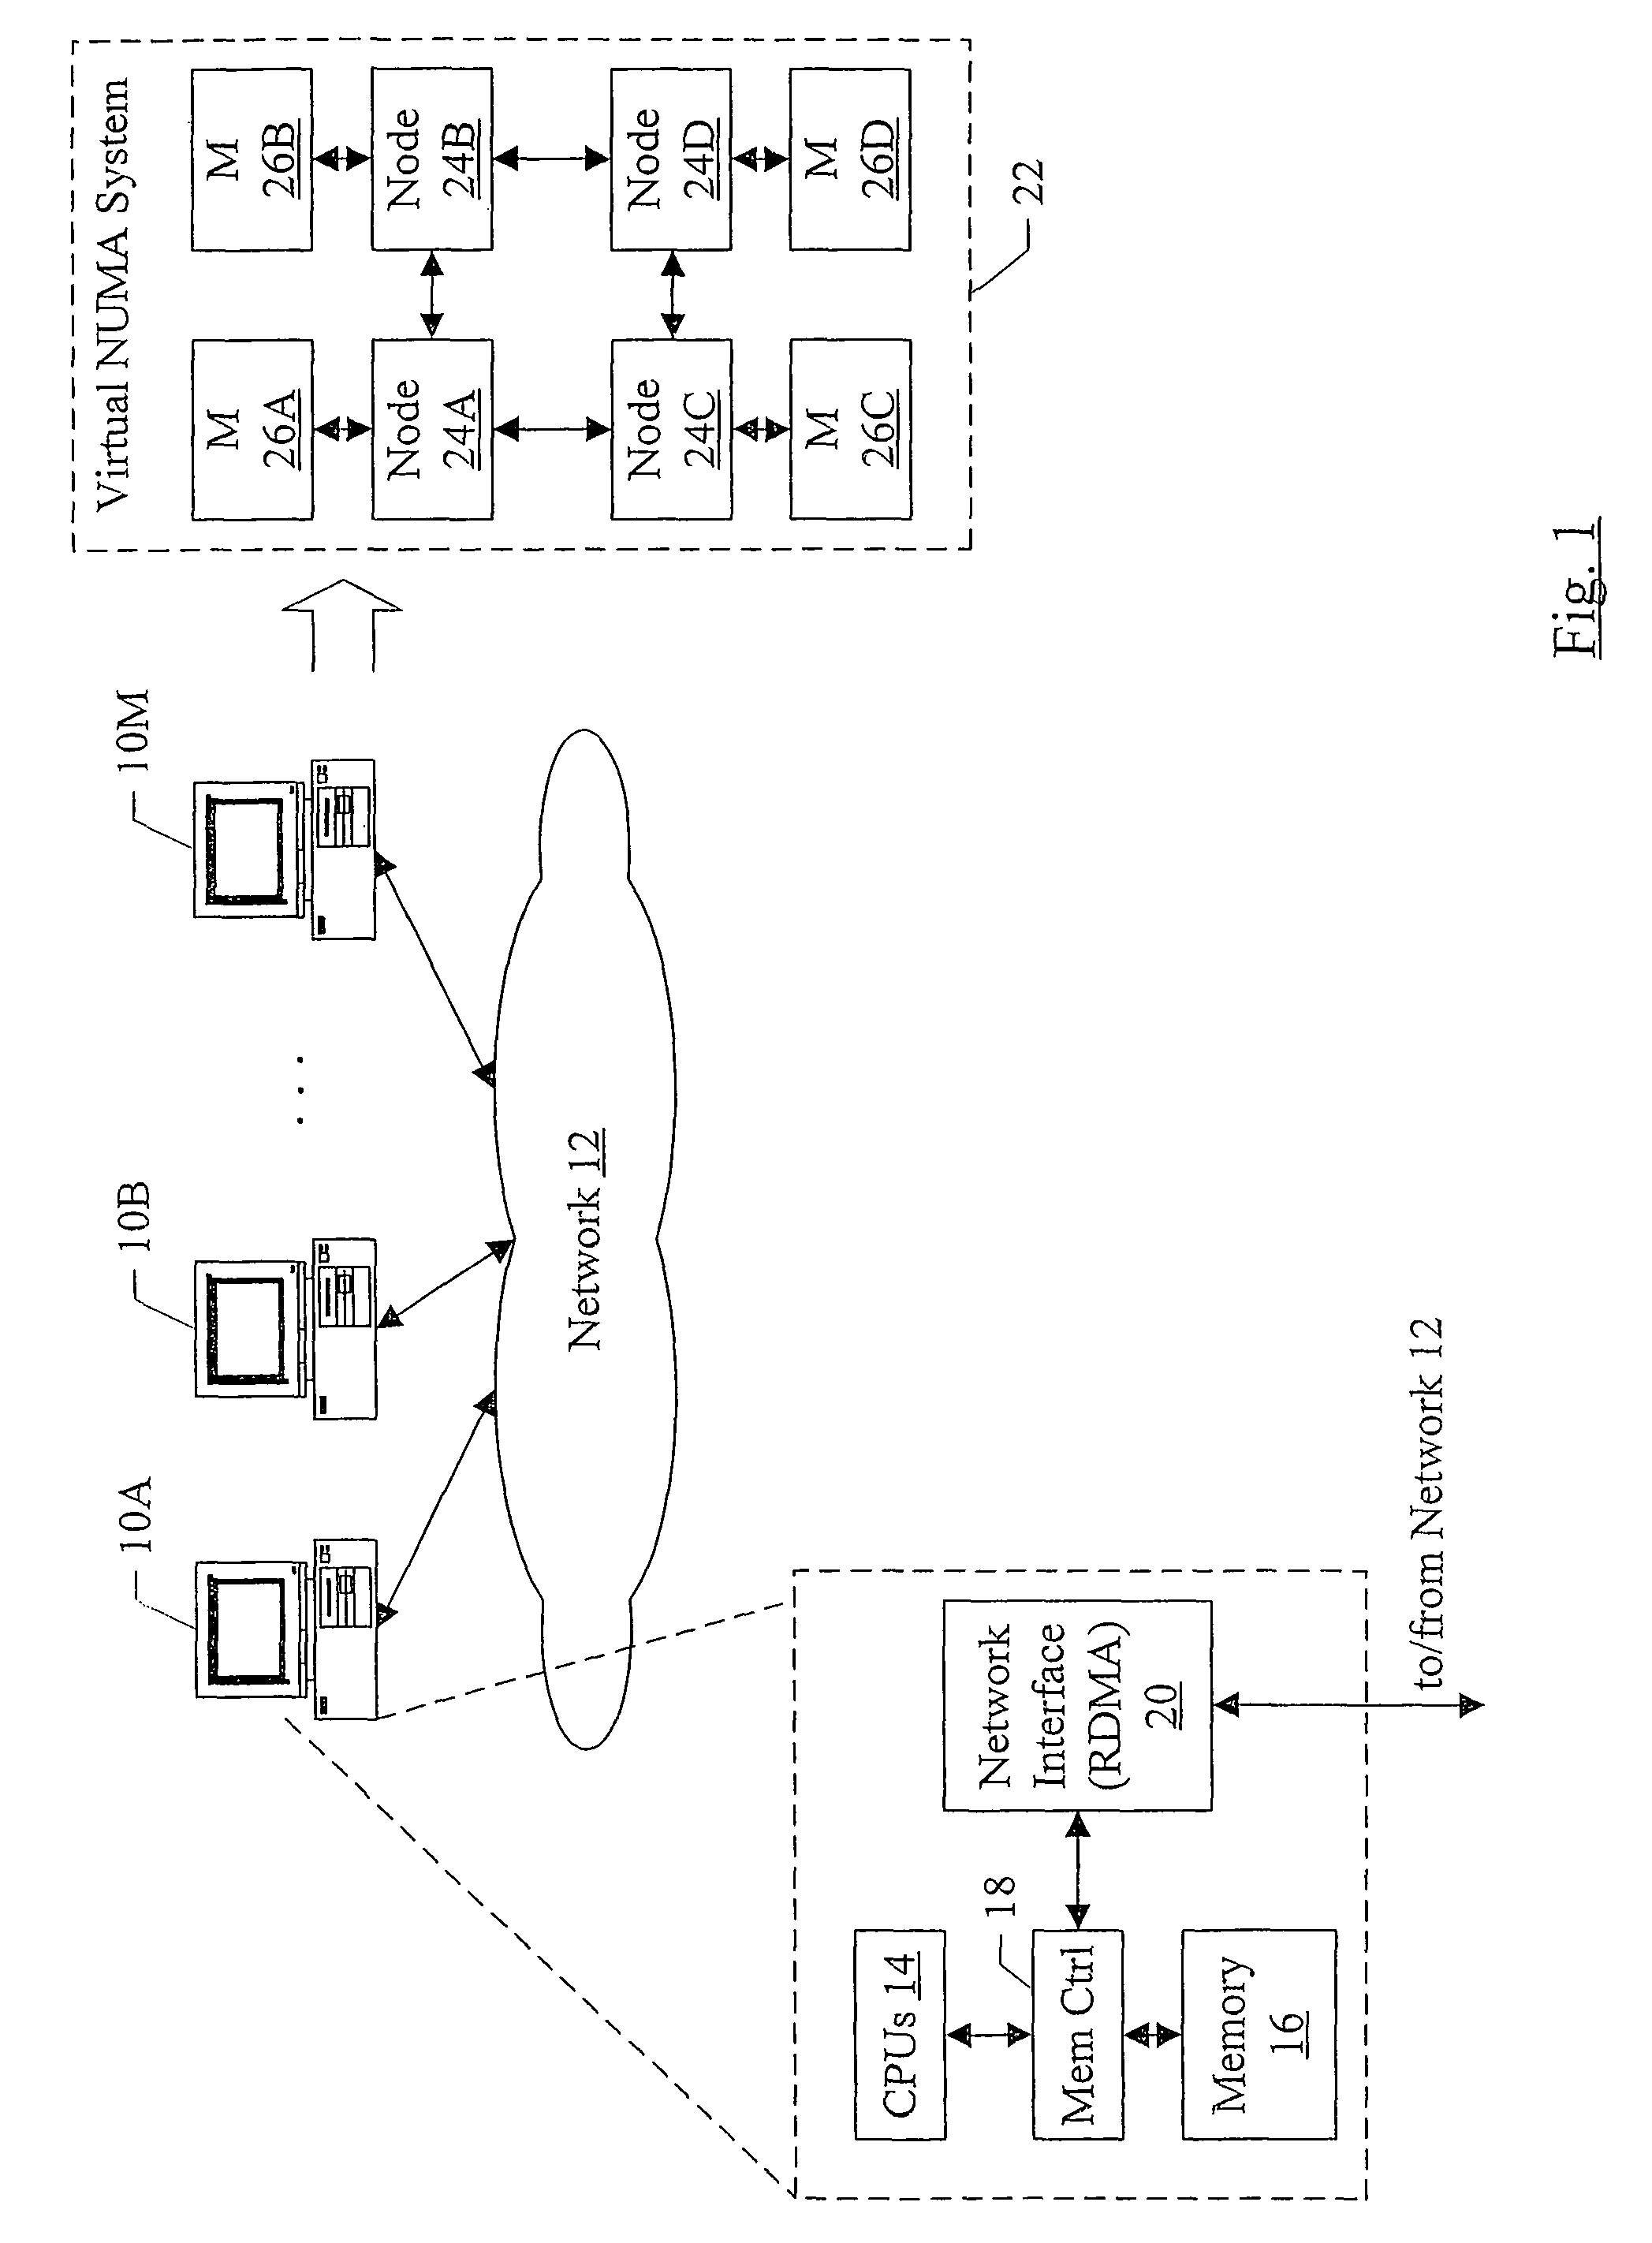 Efficient data transfer between computers in a virtual NUMA system using RDMA